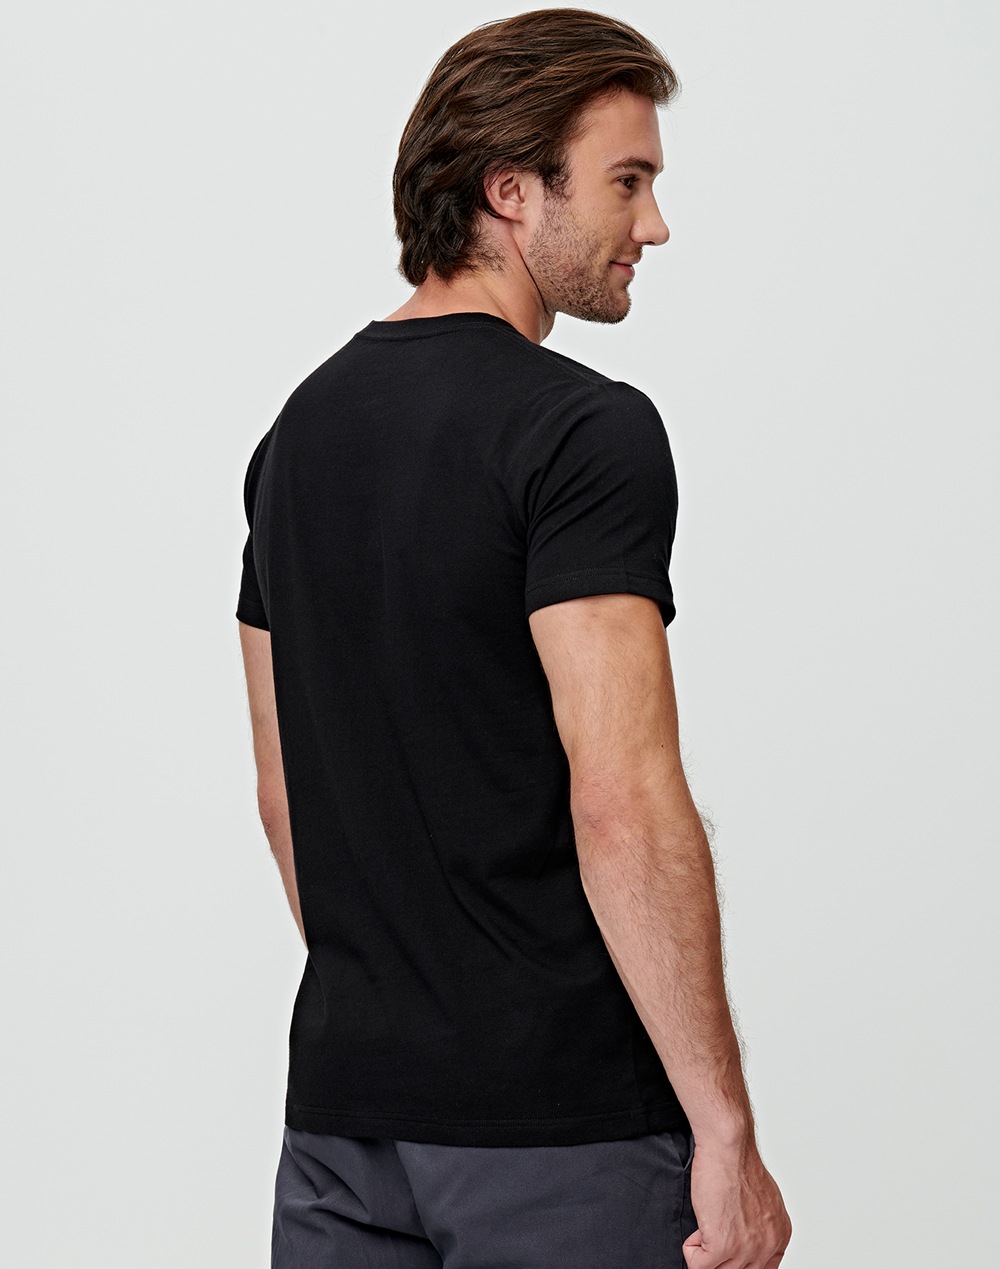 Custom Printed Premium T-Shirts Men's Neck Ribbing Online in Perth Australia